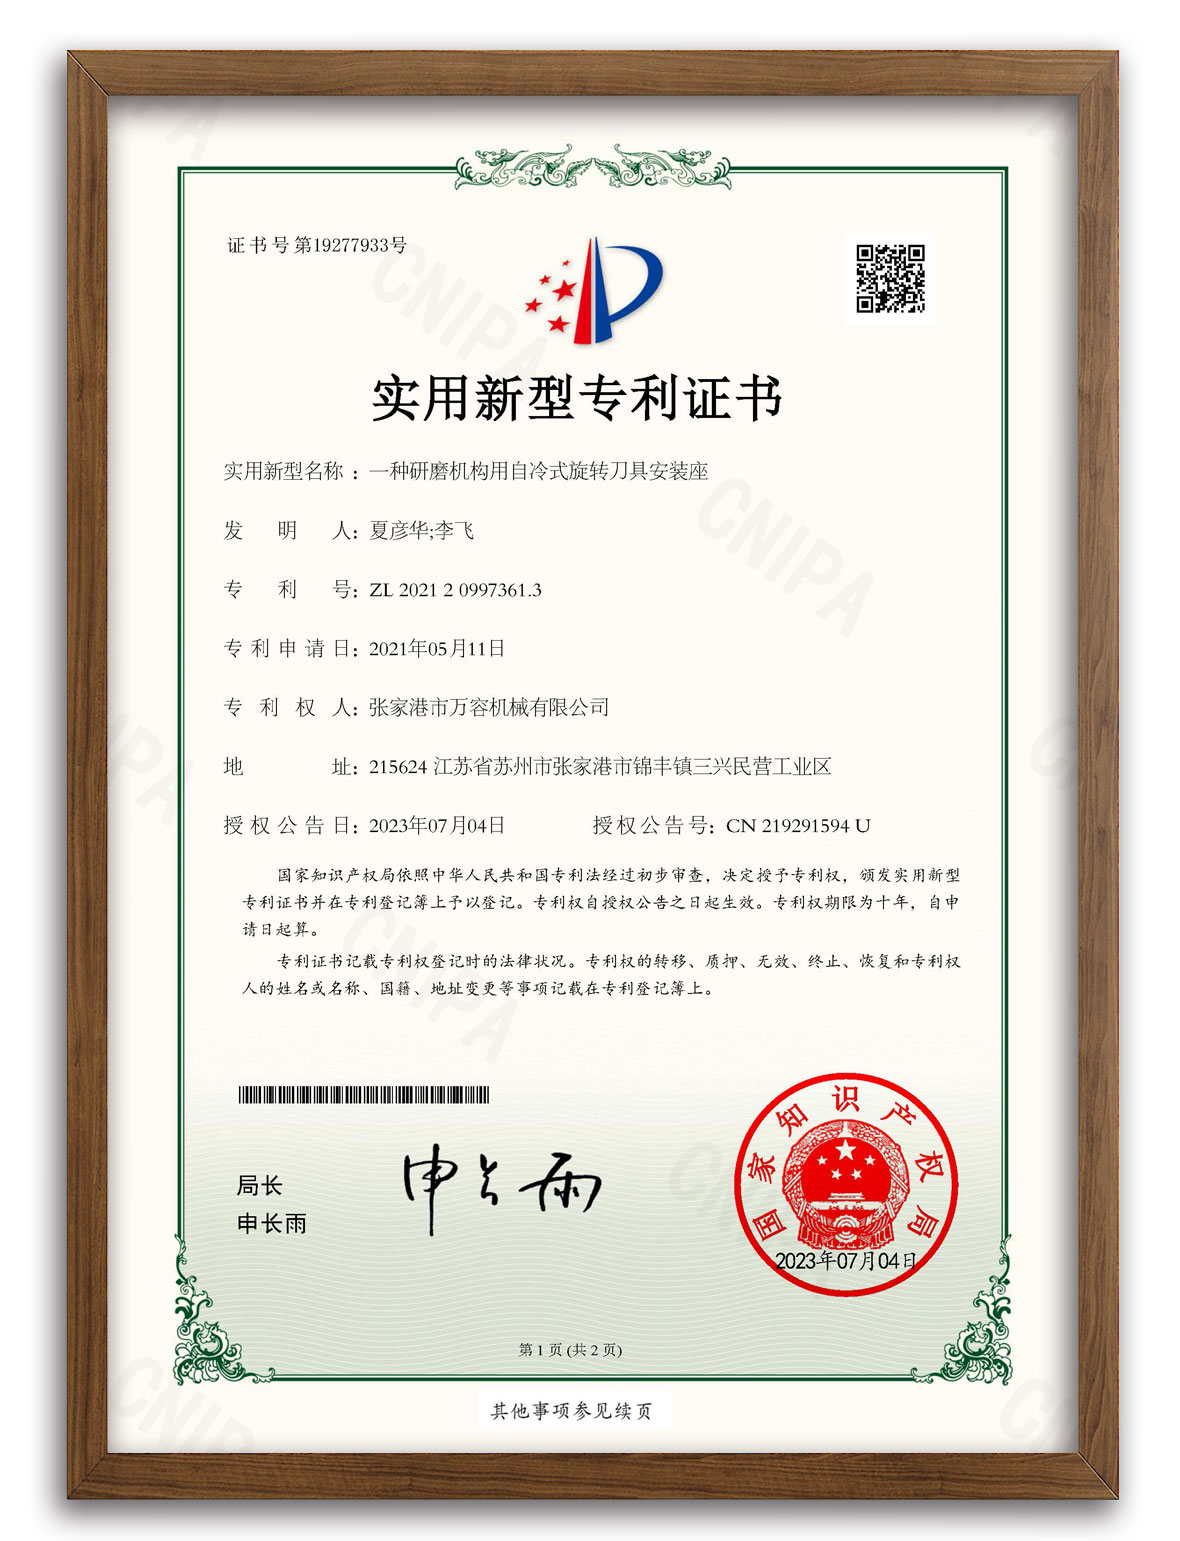 Plastic Pulverizer Utility Model Patent Certificate